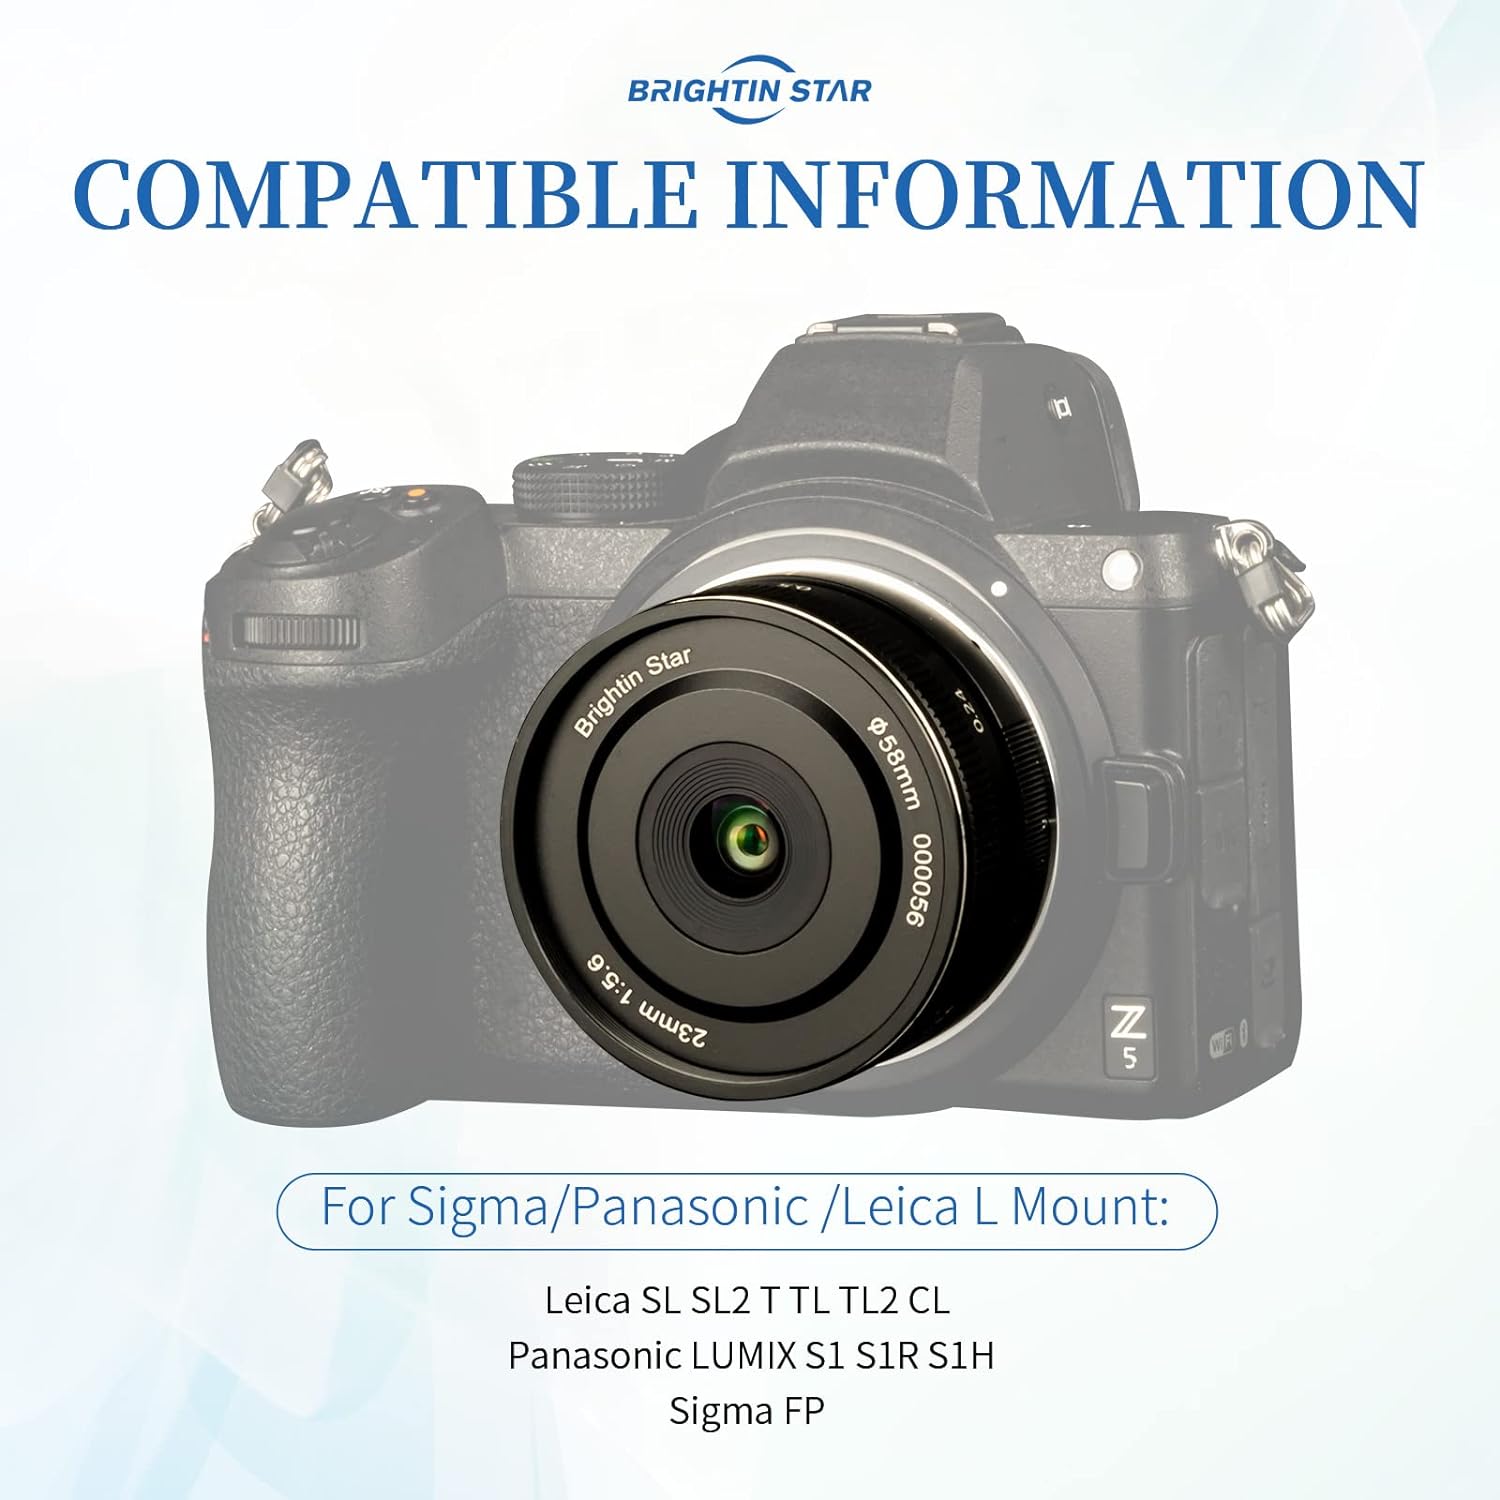 Brightin Star 23mm F5.6 Full Frame Portable Pancake Manual Focus Mirrorless Camera Lens, Fit for L-Mount Leica SL, SL2, T, TL, TL2, TL18, CL/Panasonic LUMIX S1, S1R, S1H/ Sigma FP